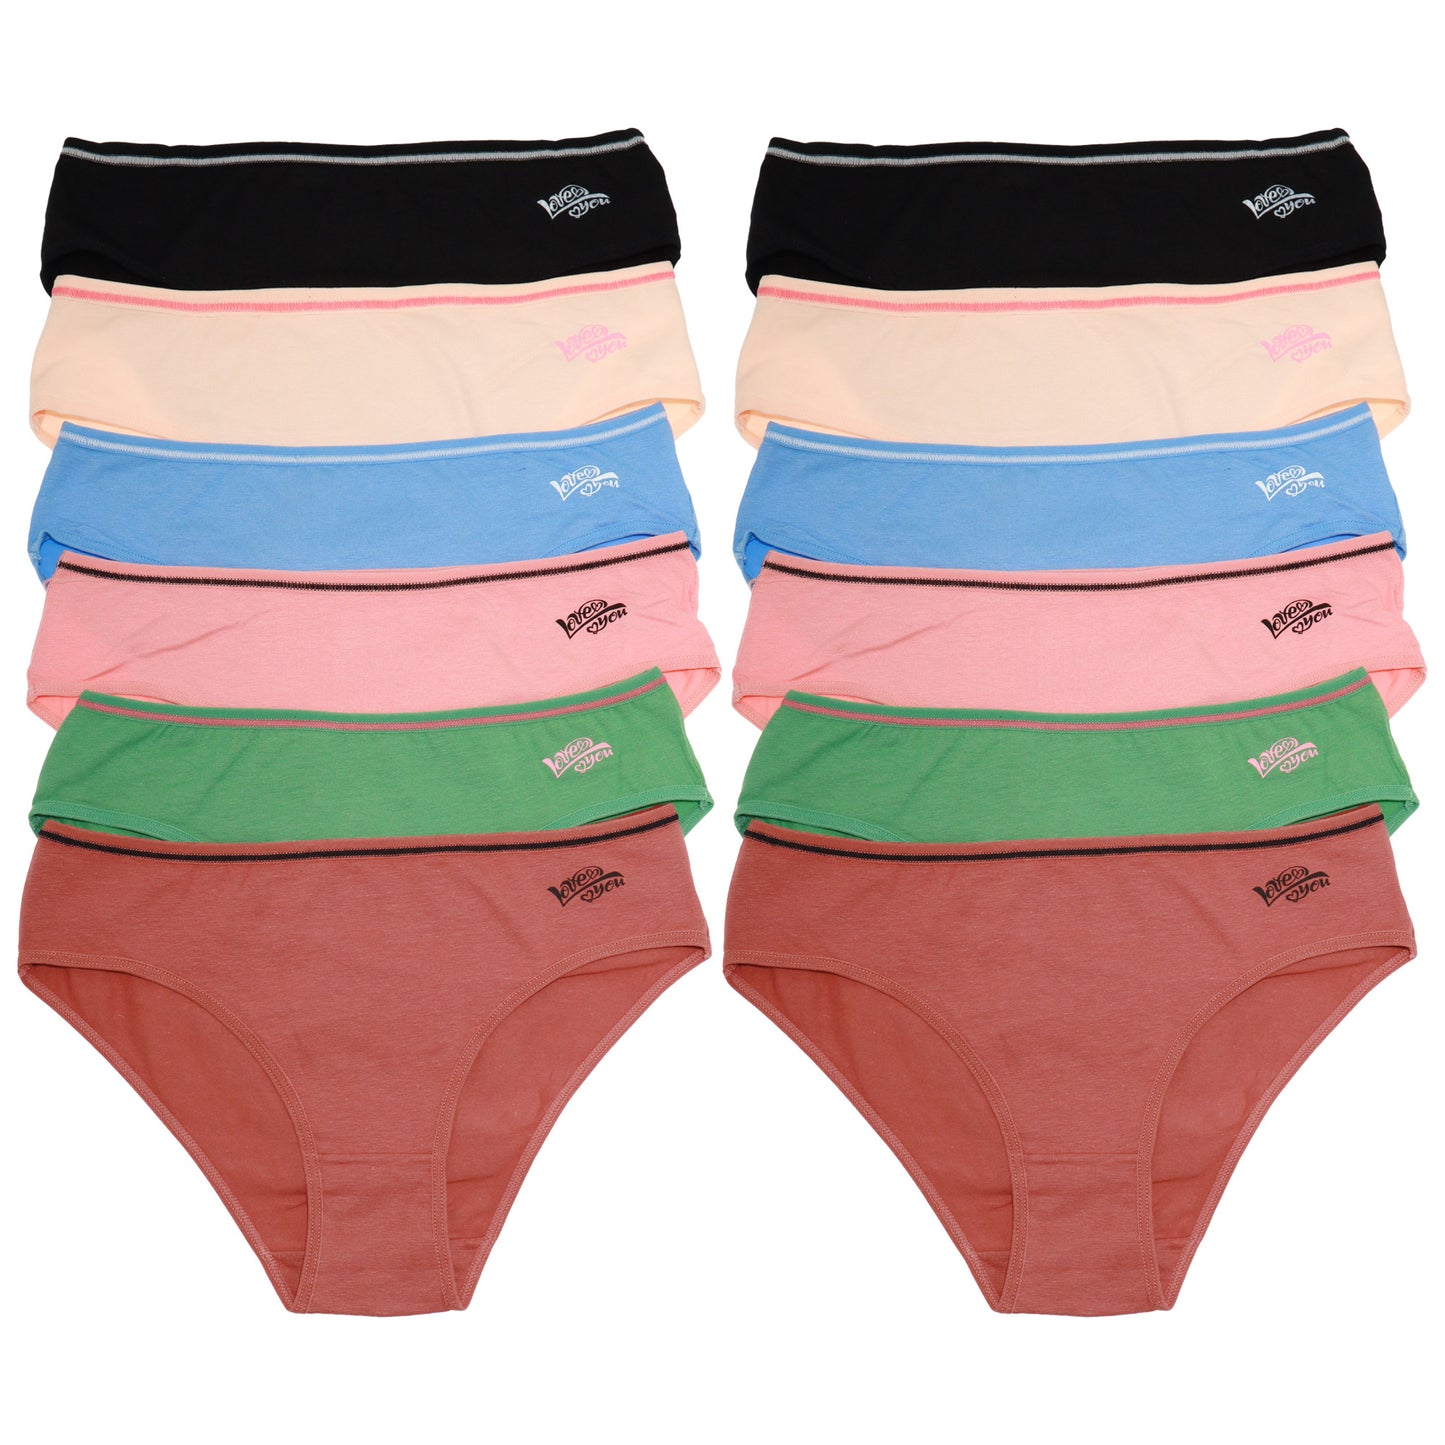 Cotton Bikini Panties with Love you Print Design (6-Pack)